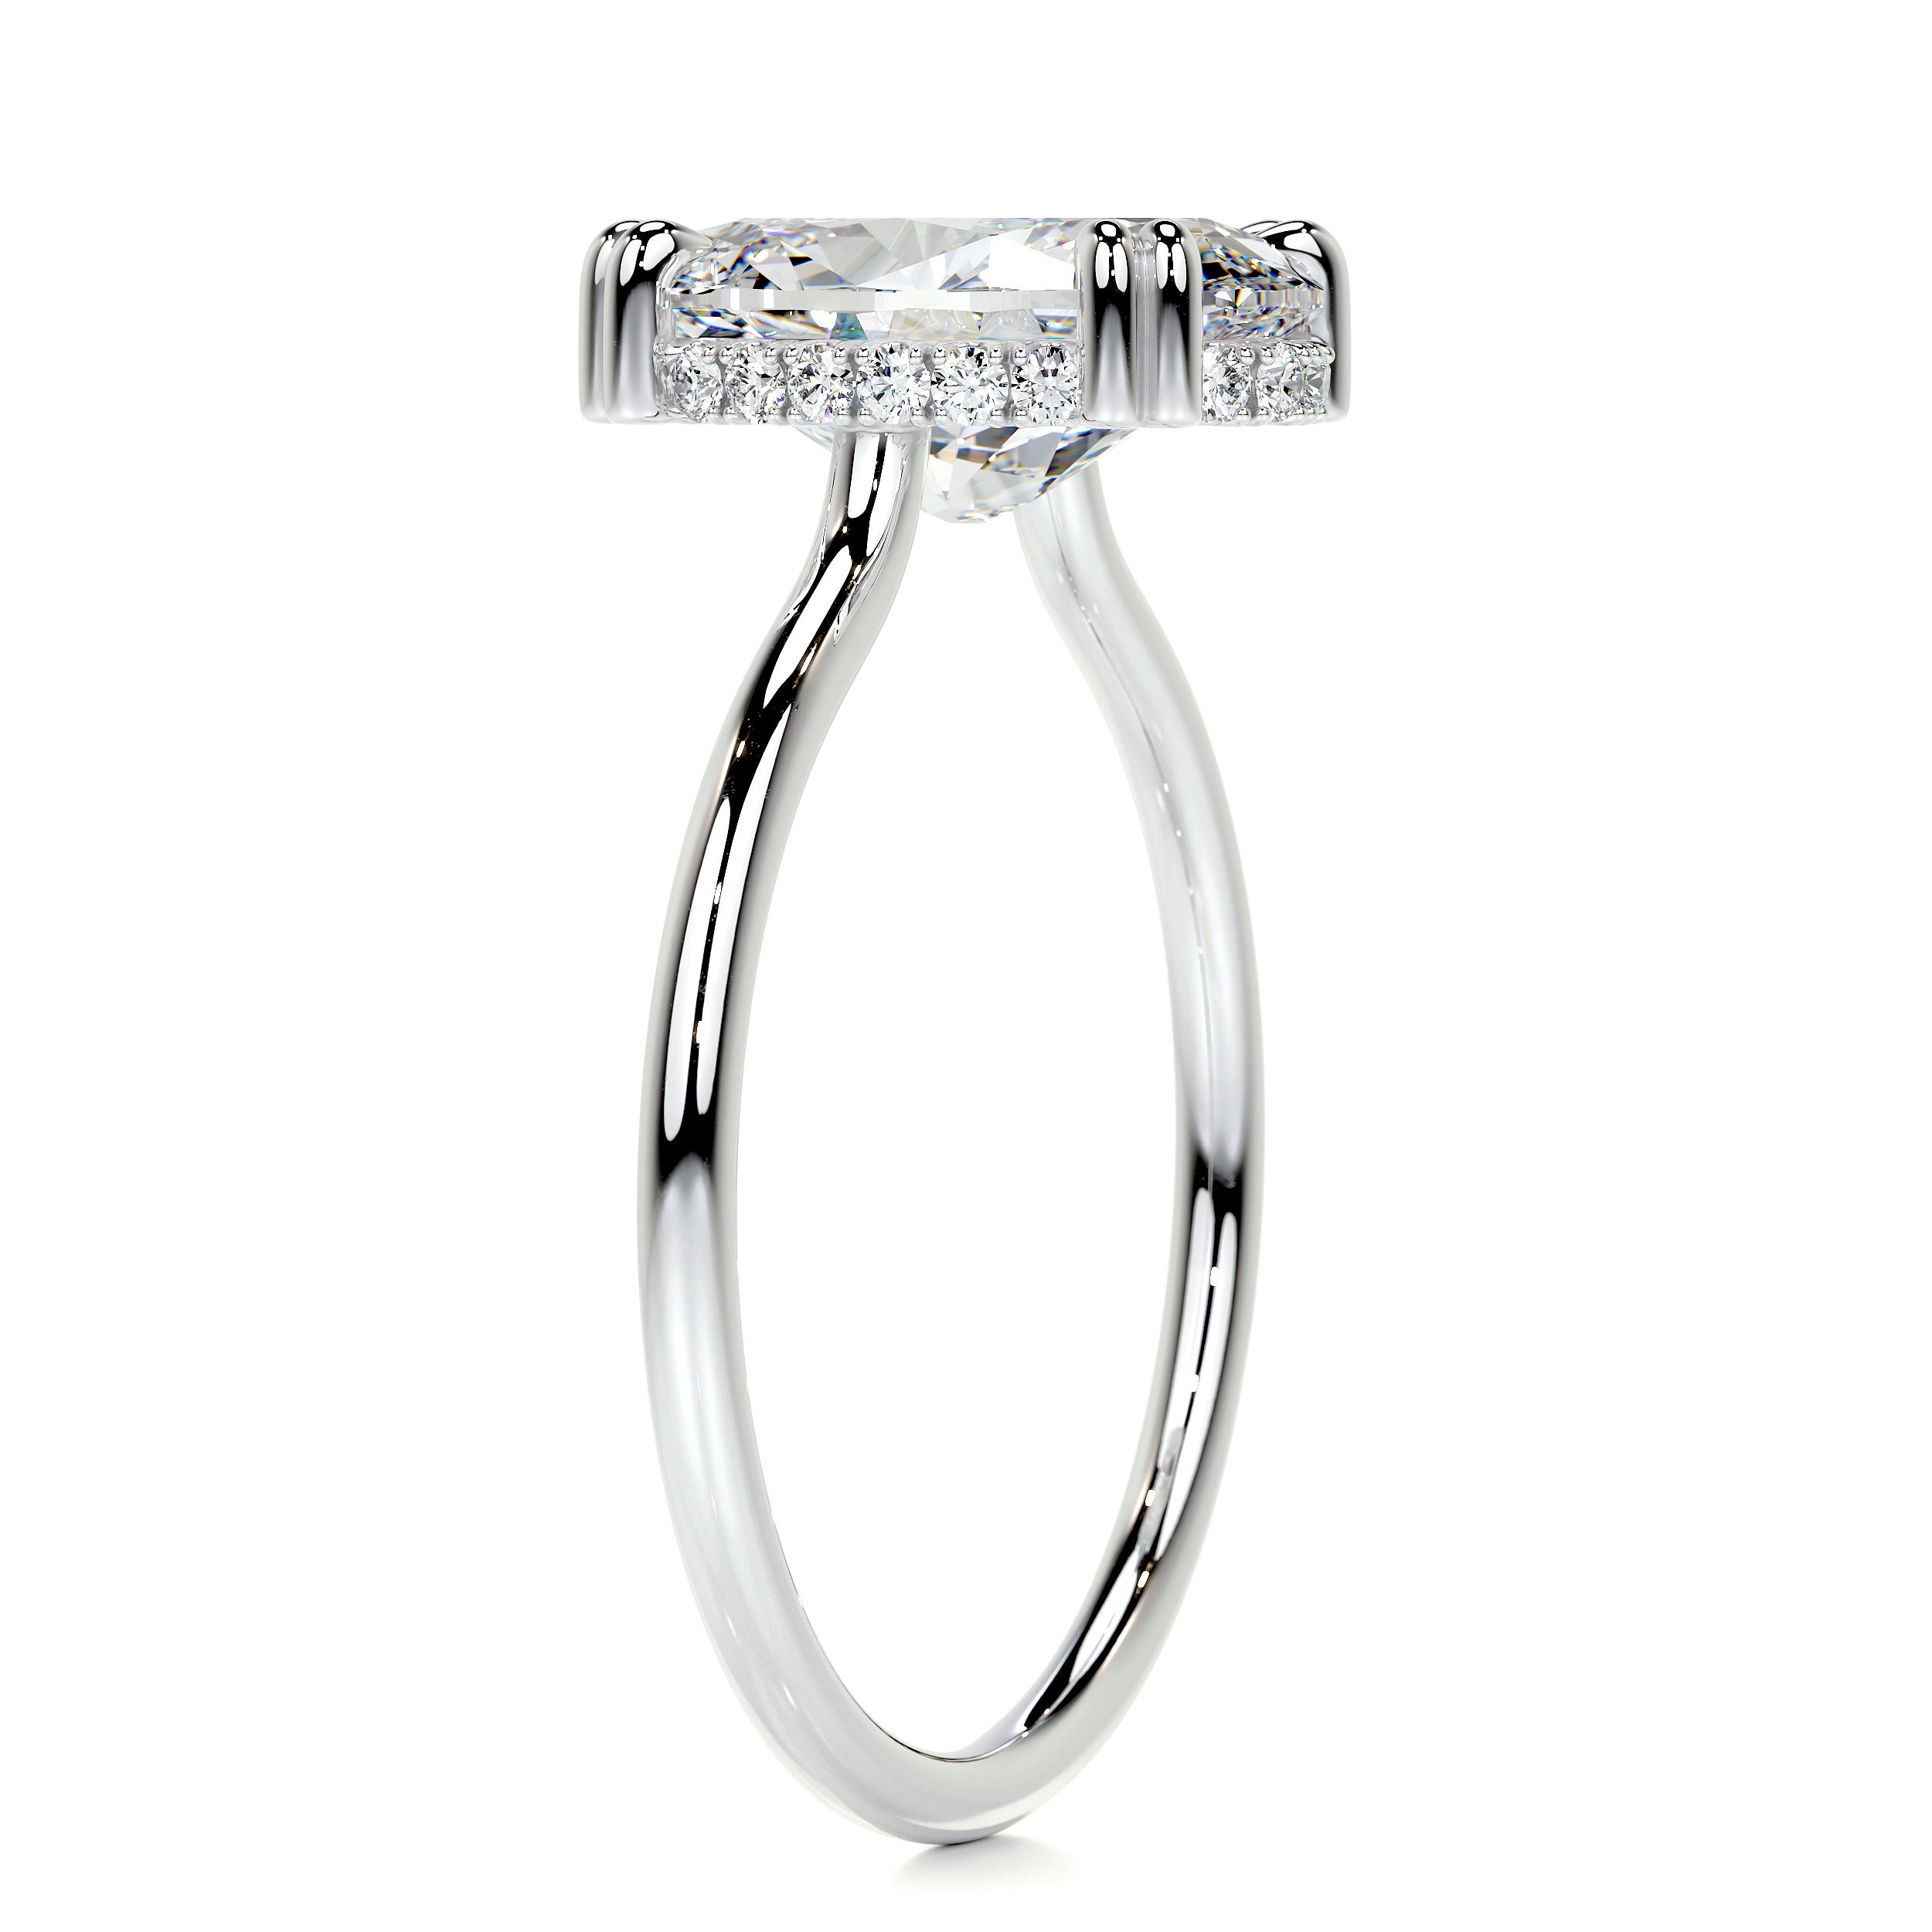 Harriet Diamond Engagement Ring   (3.1 Carat) -18K White Gold